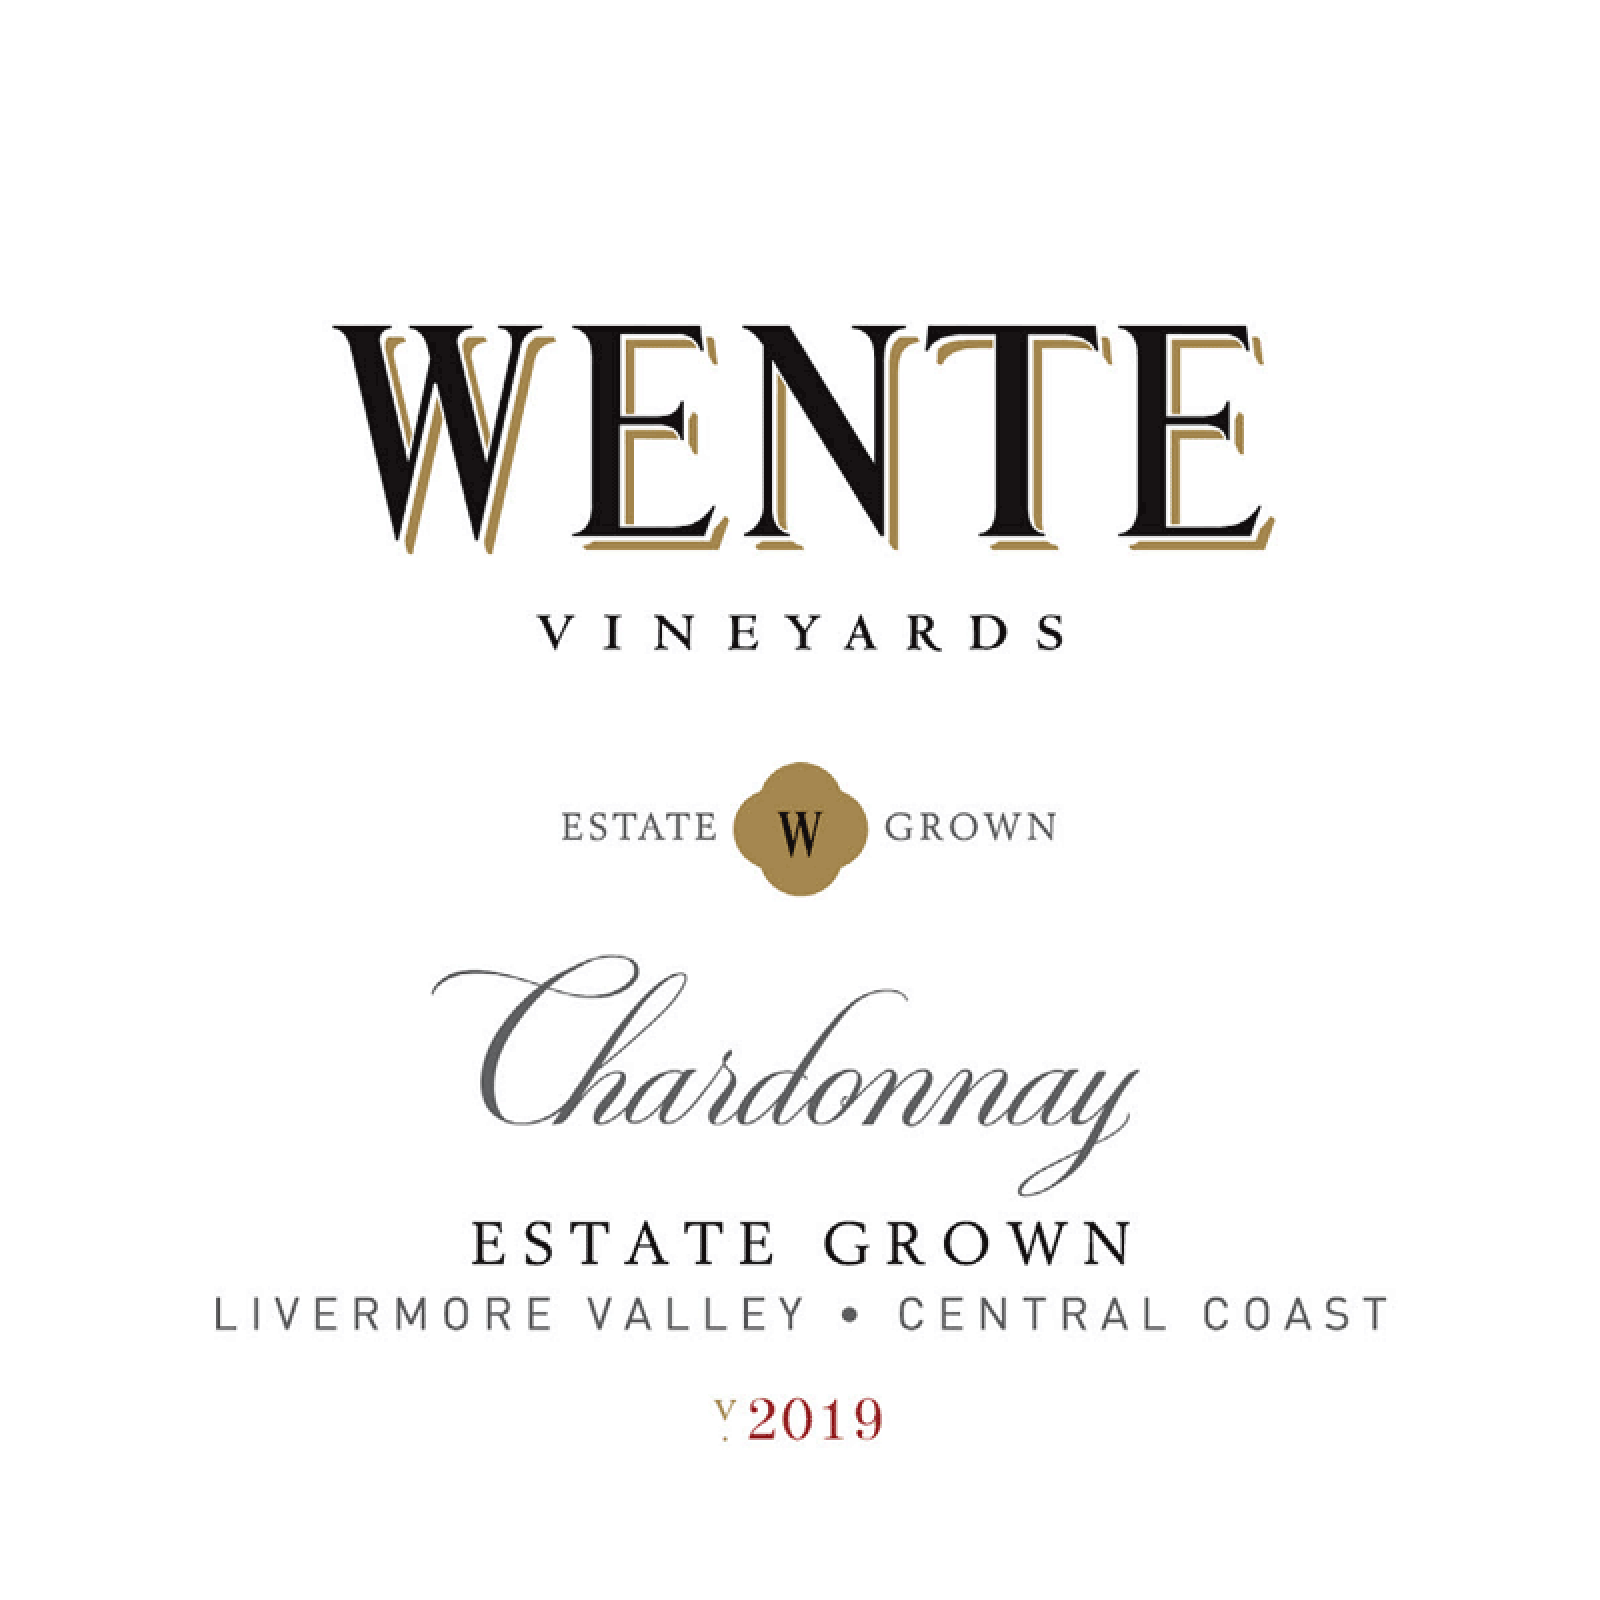 Wente Vineyards Estate Grown Chardonnay 2019